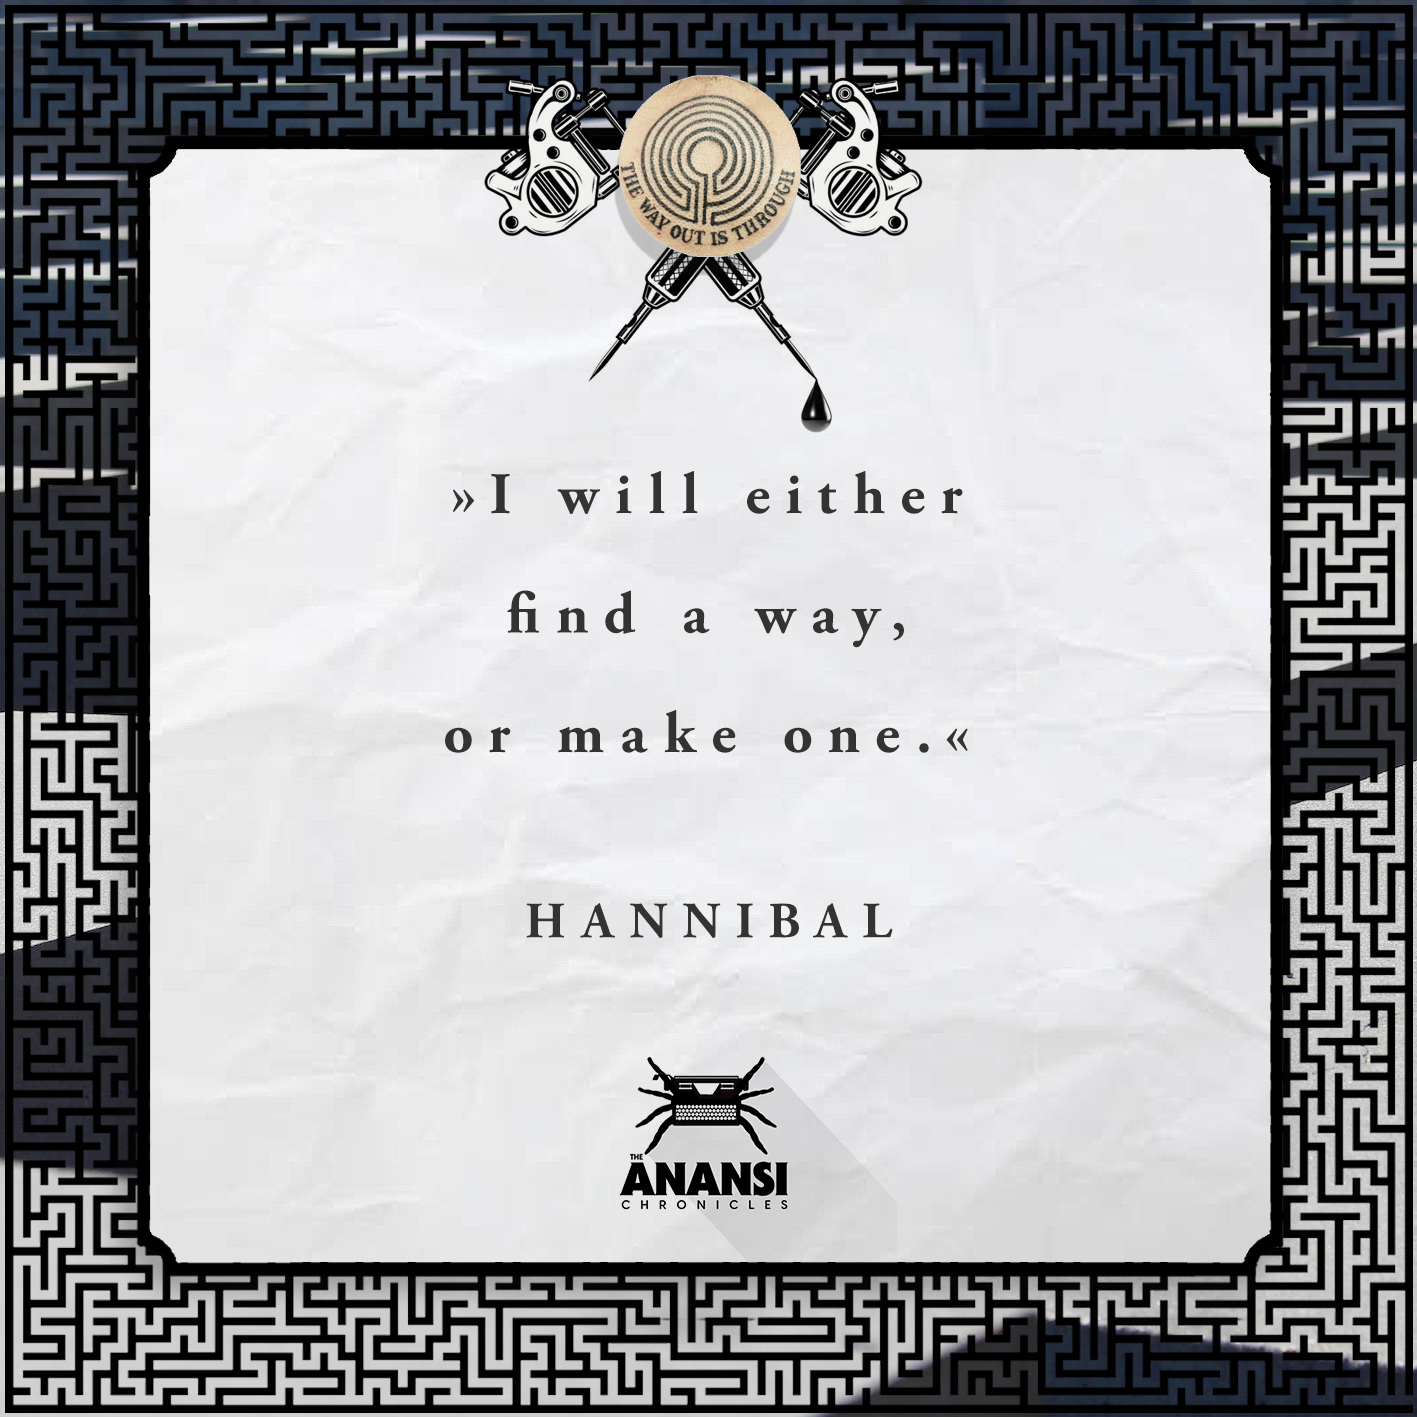 Hannibal knows best